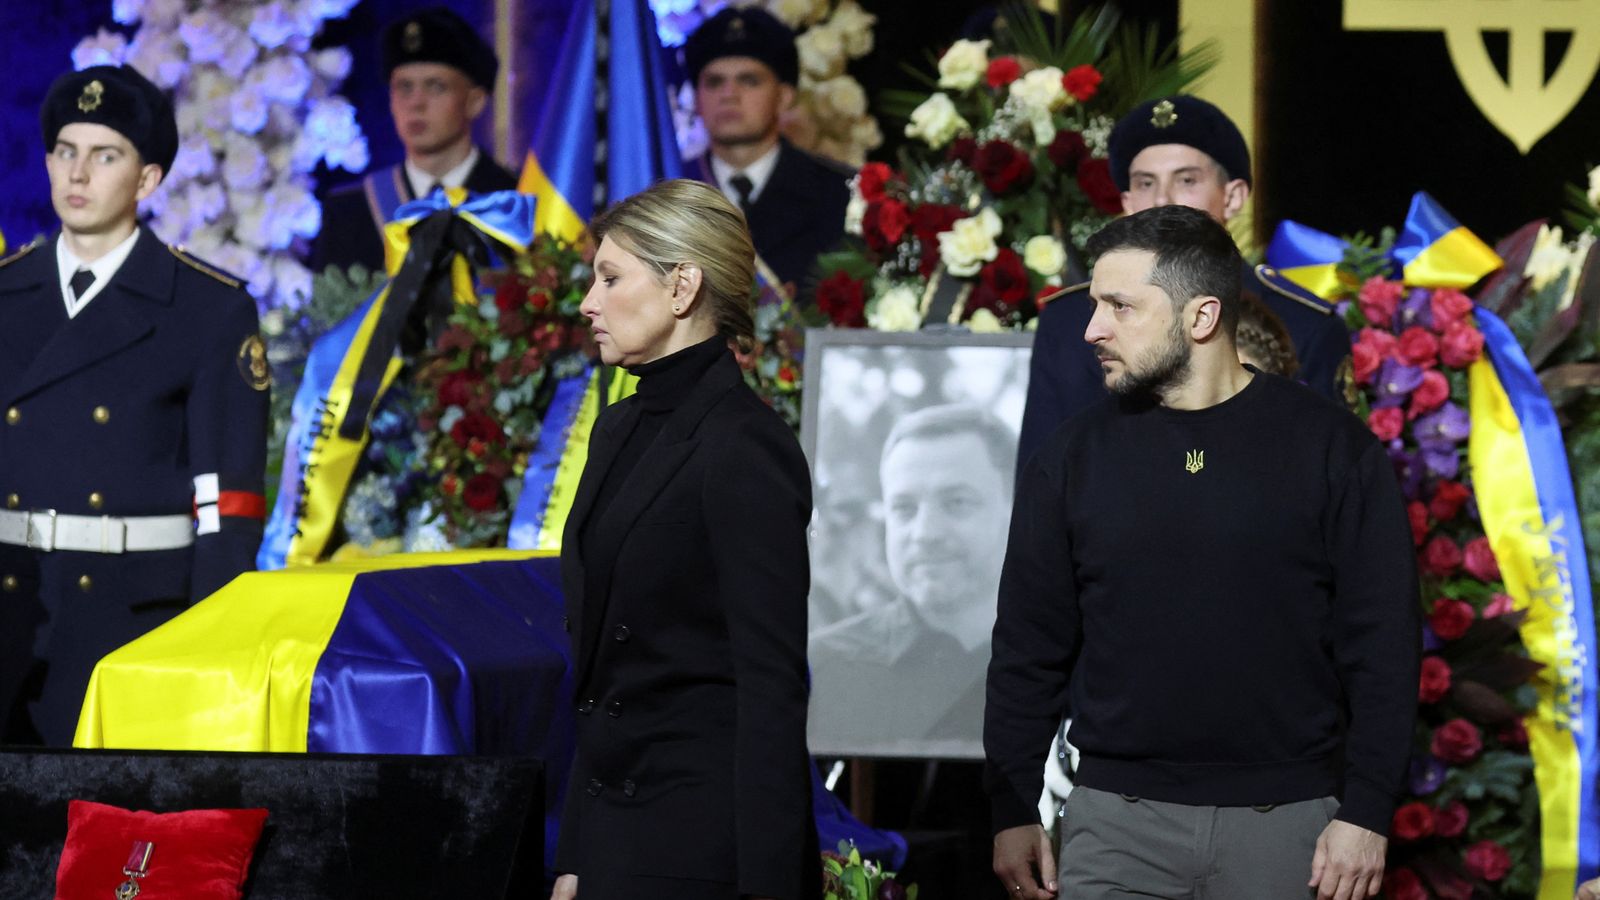 Ukraine: Emotional President Volodymyr Zelenskyy honours interior minister and those killed in helicopter crash